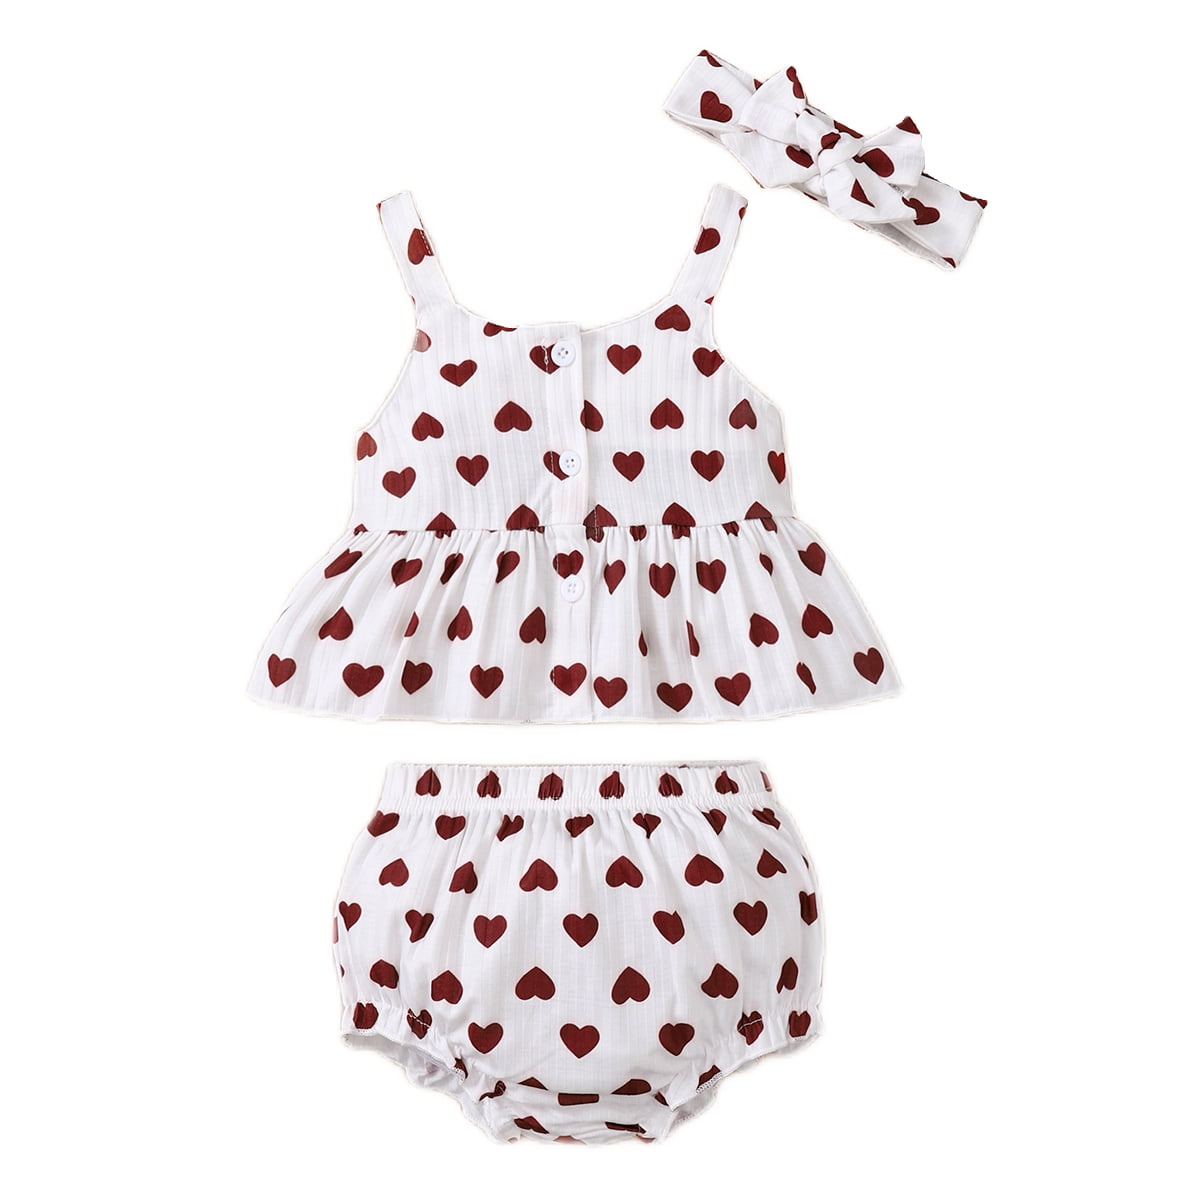 Newborn Baby Girls Heart Print Sleeveless Romper Dress Headband Outfits Set US